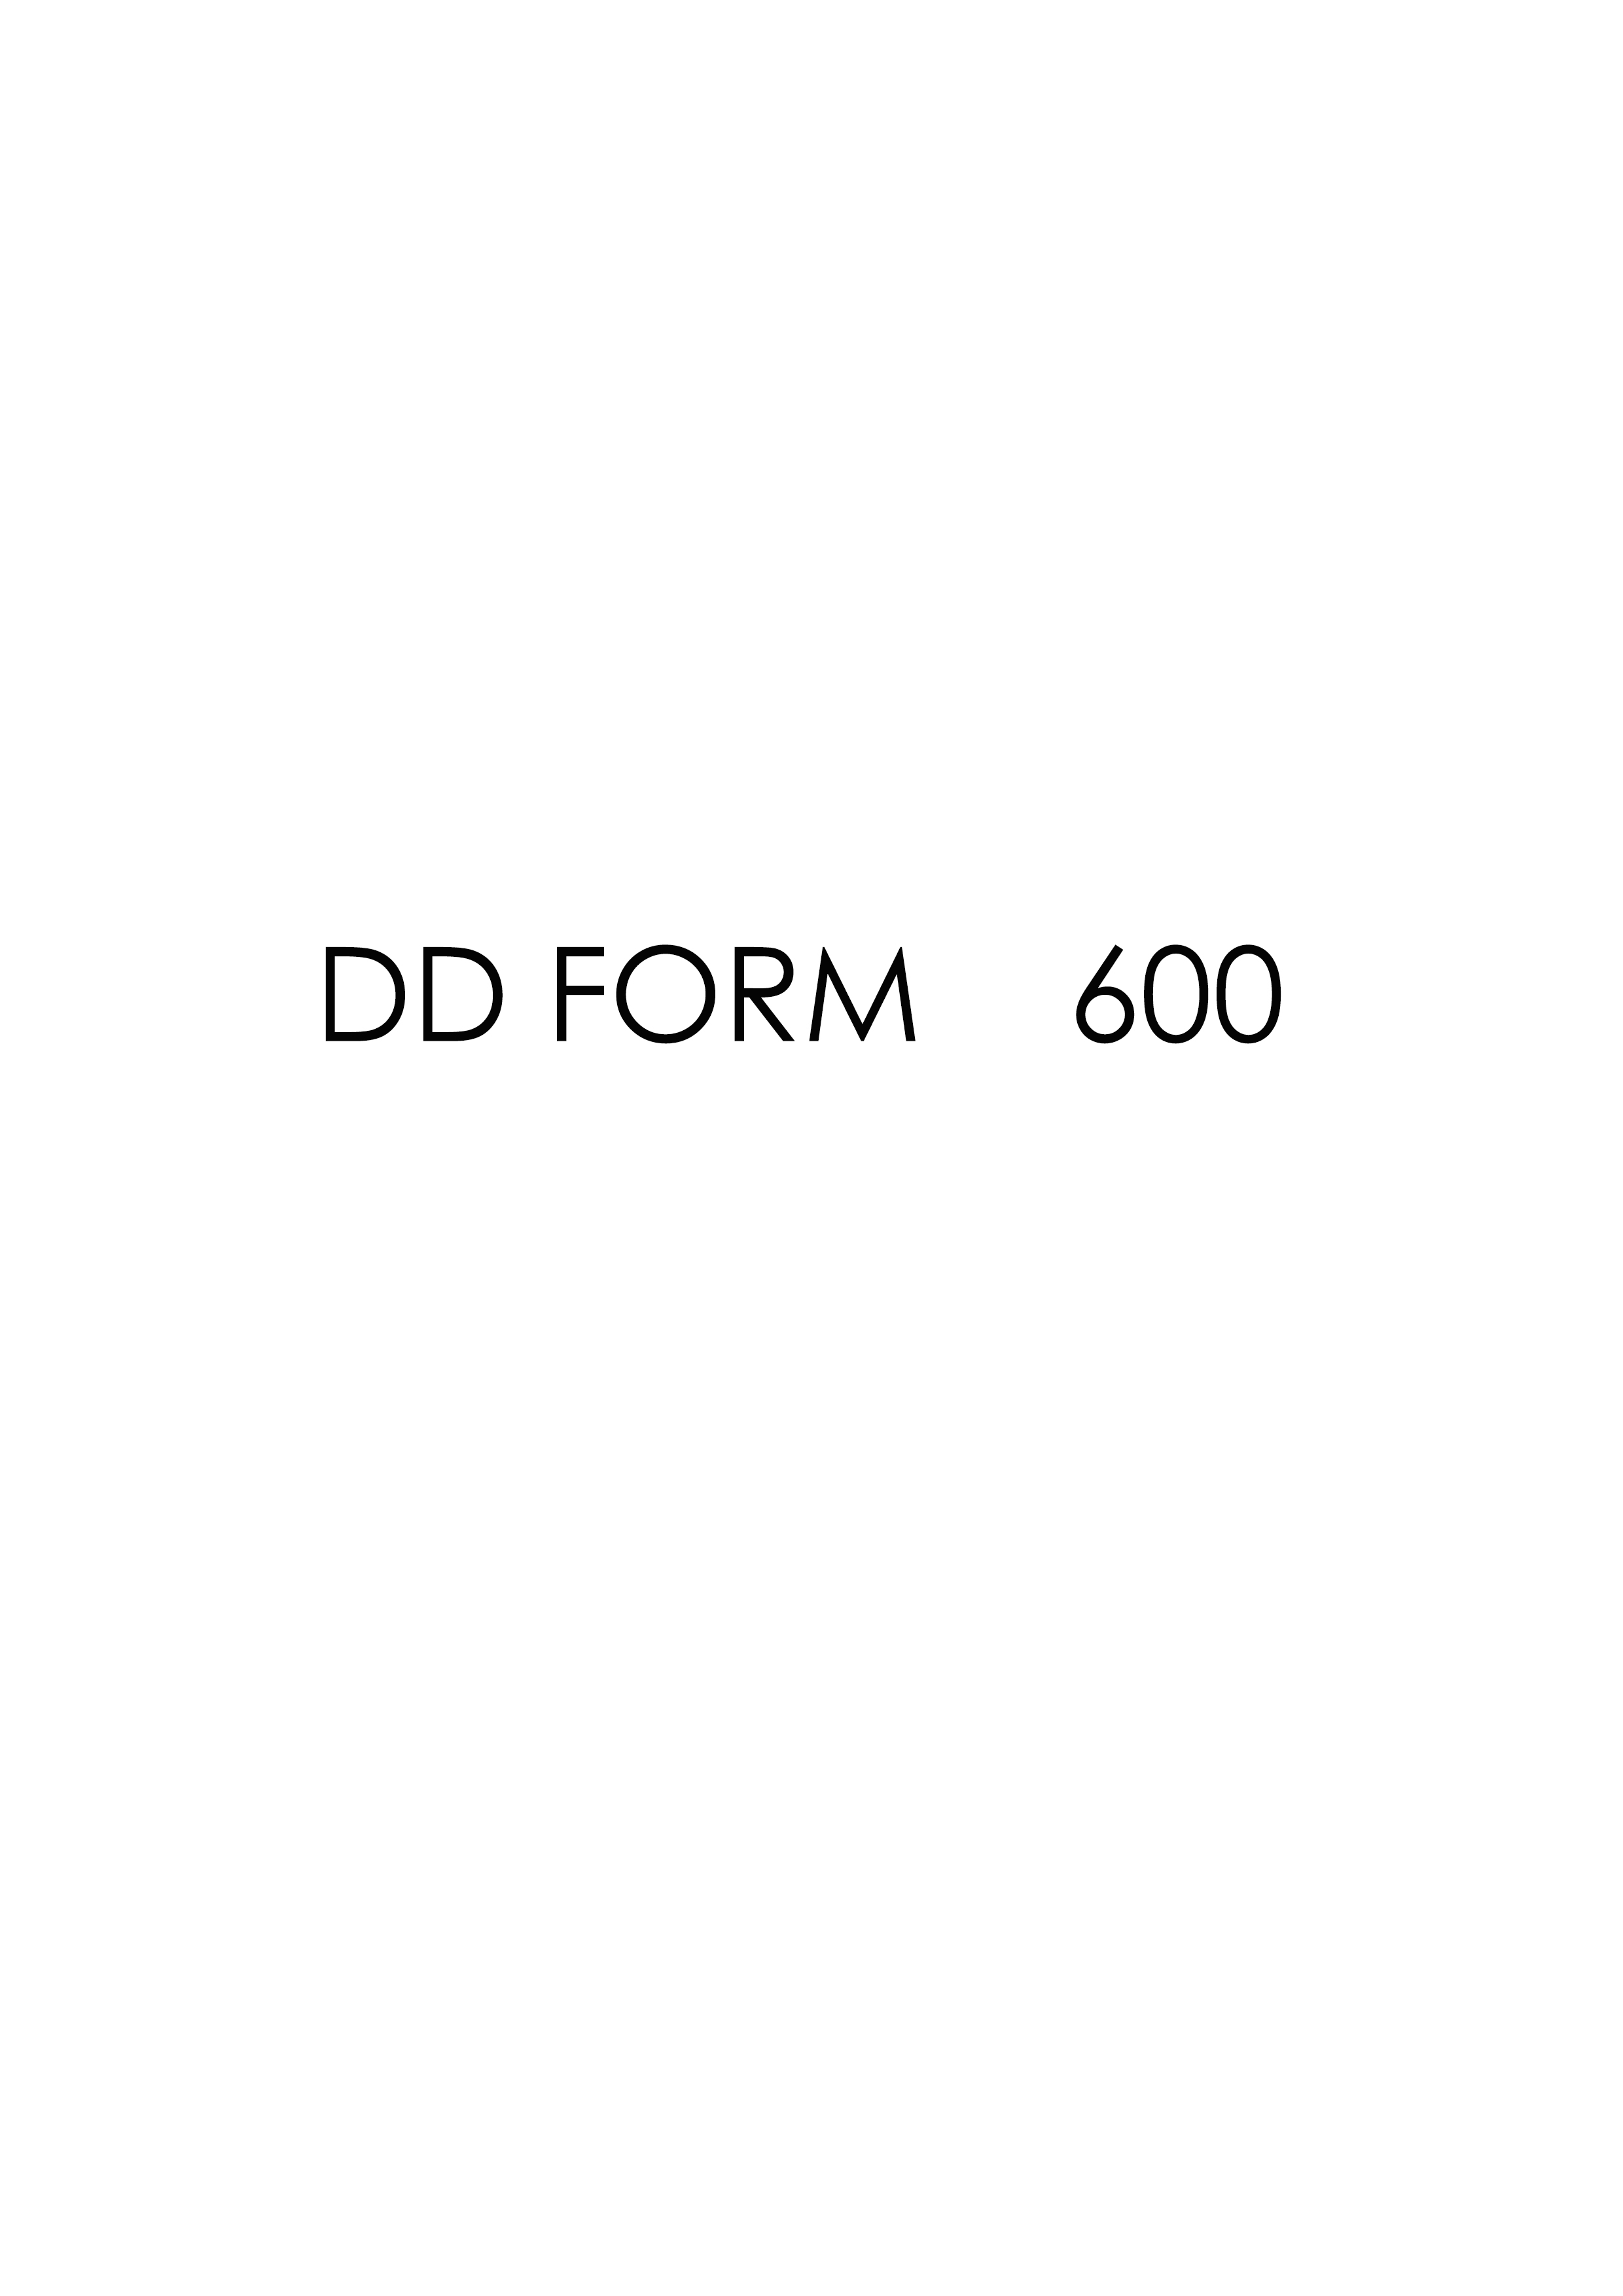 Download dd form 600